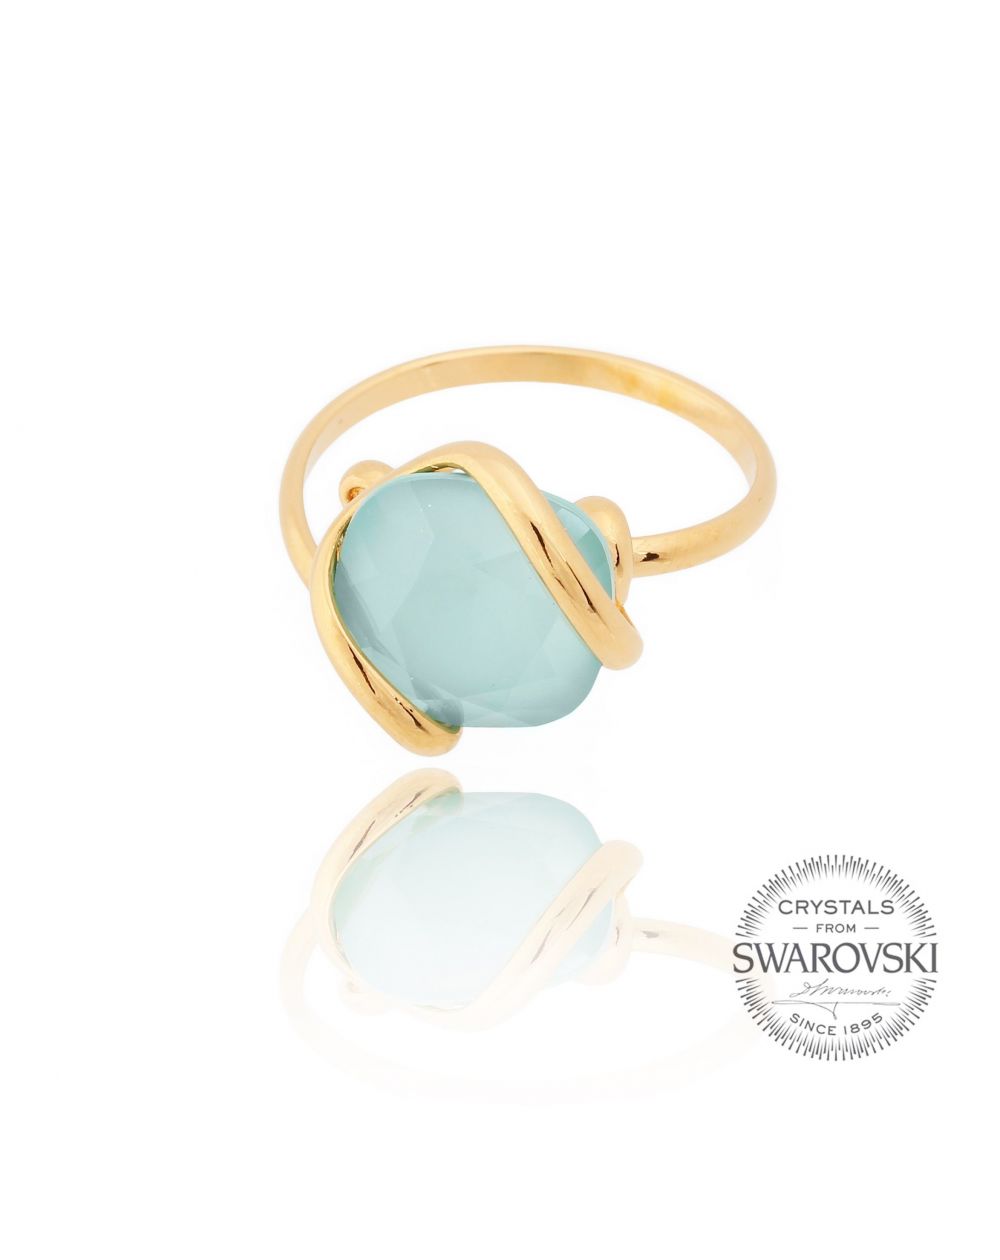 Andrea Marazzini bijoux - Bague cristal ovale Swarovski menthe